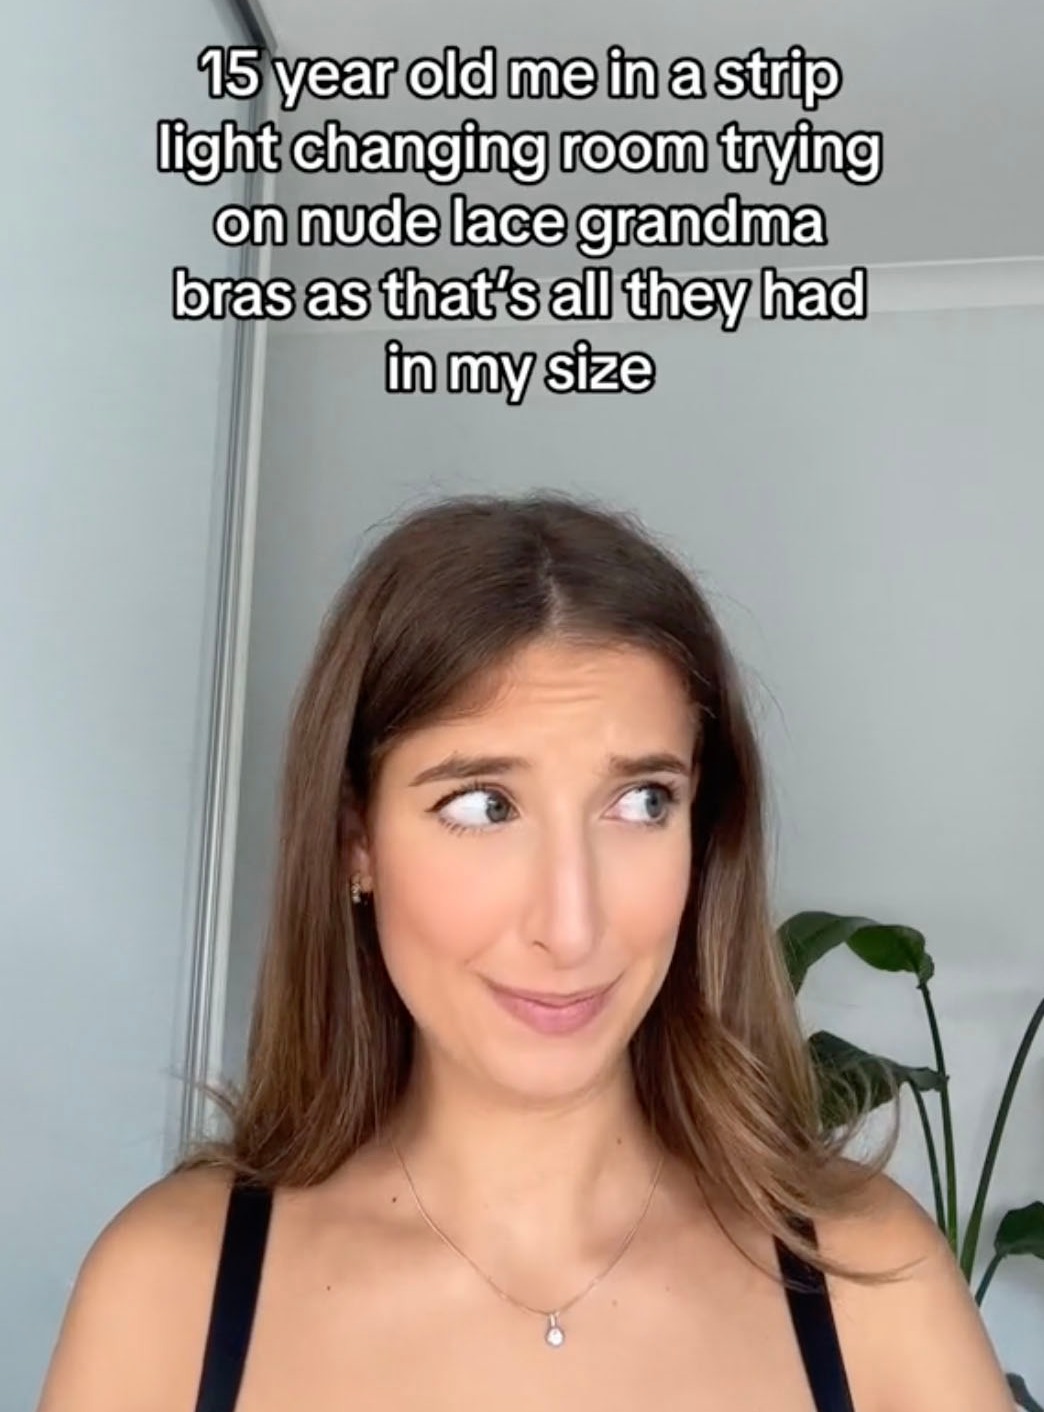 afzal masood share skinny granny big tits photos